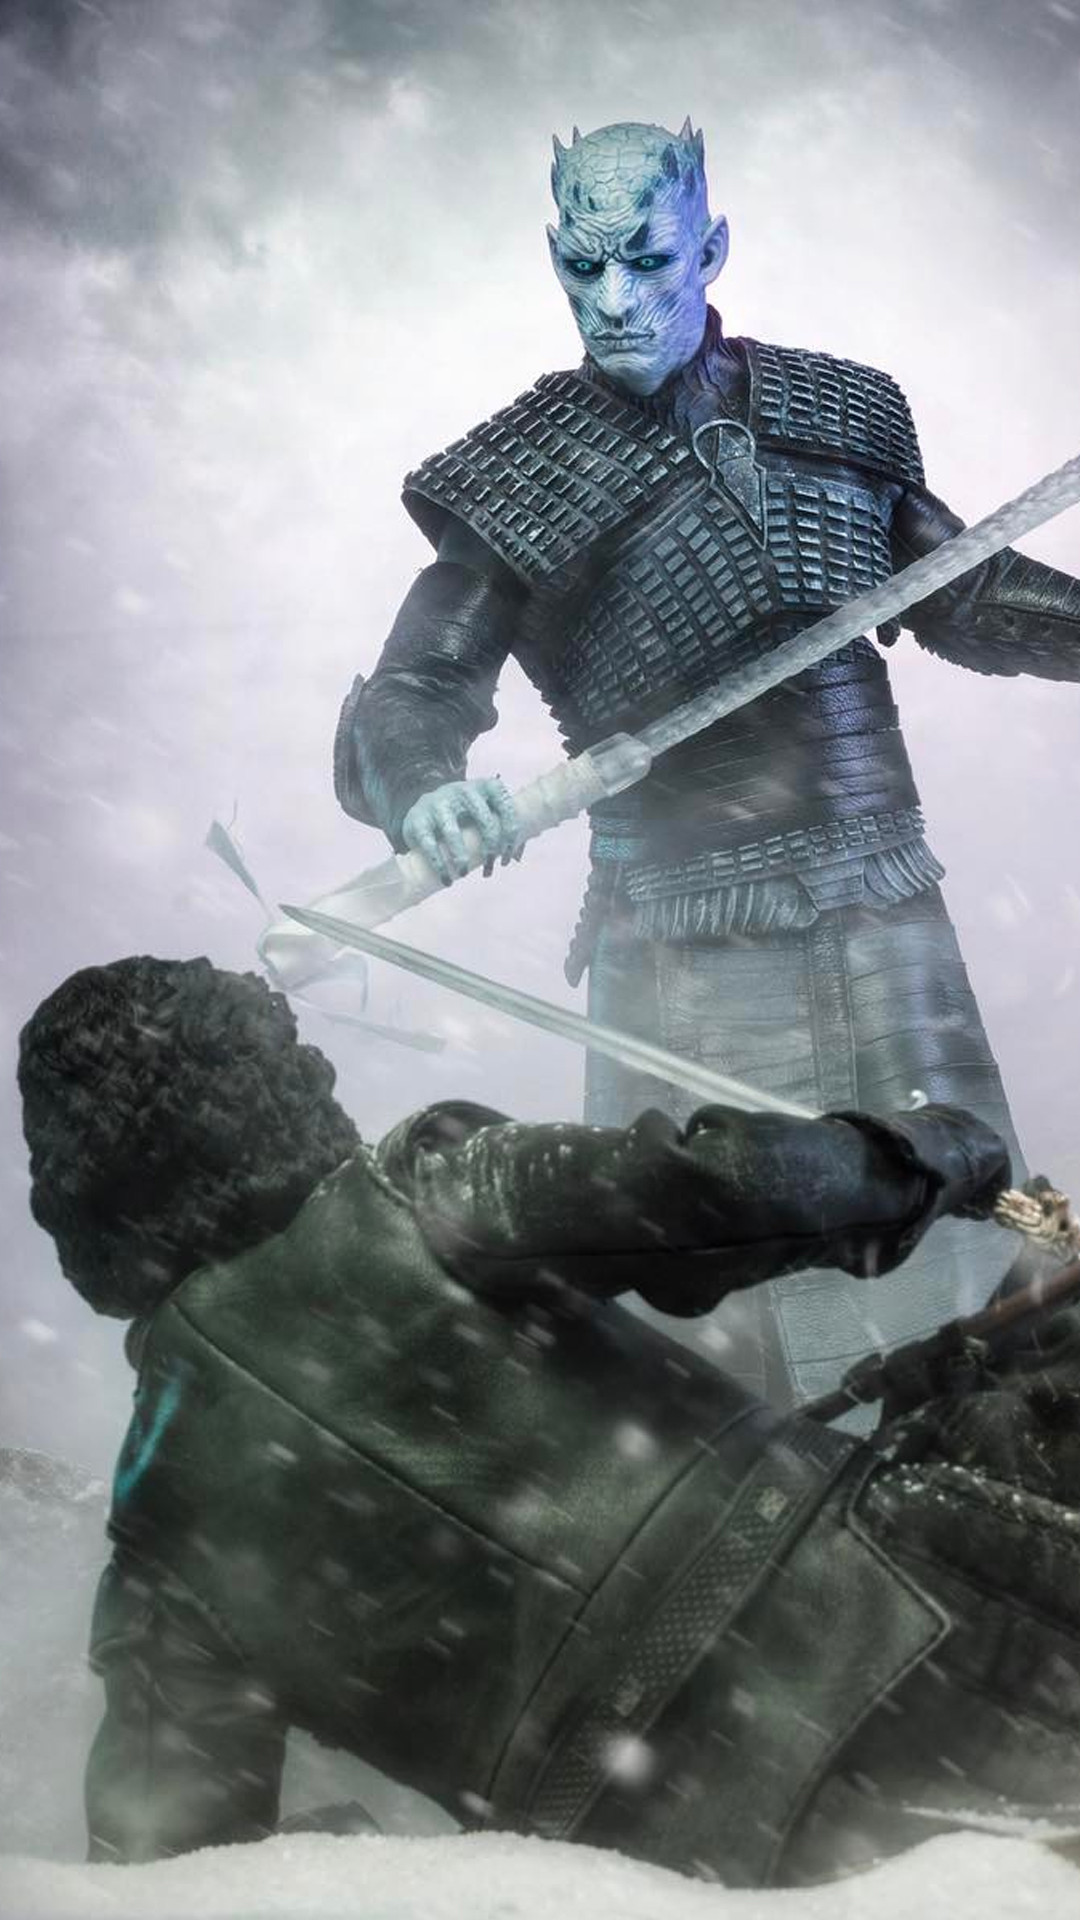 1080x1920 #9 The Night King vs Jon Snow. Taken by  https://www.instagram.com/onesix_shooter/